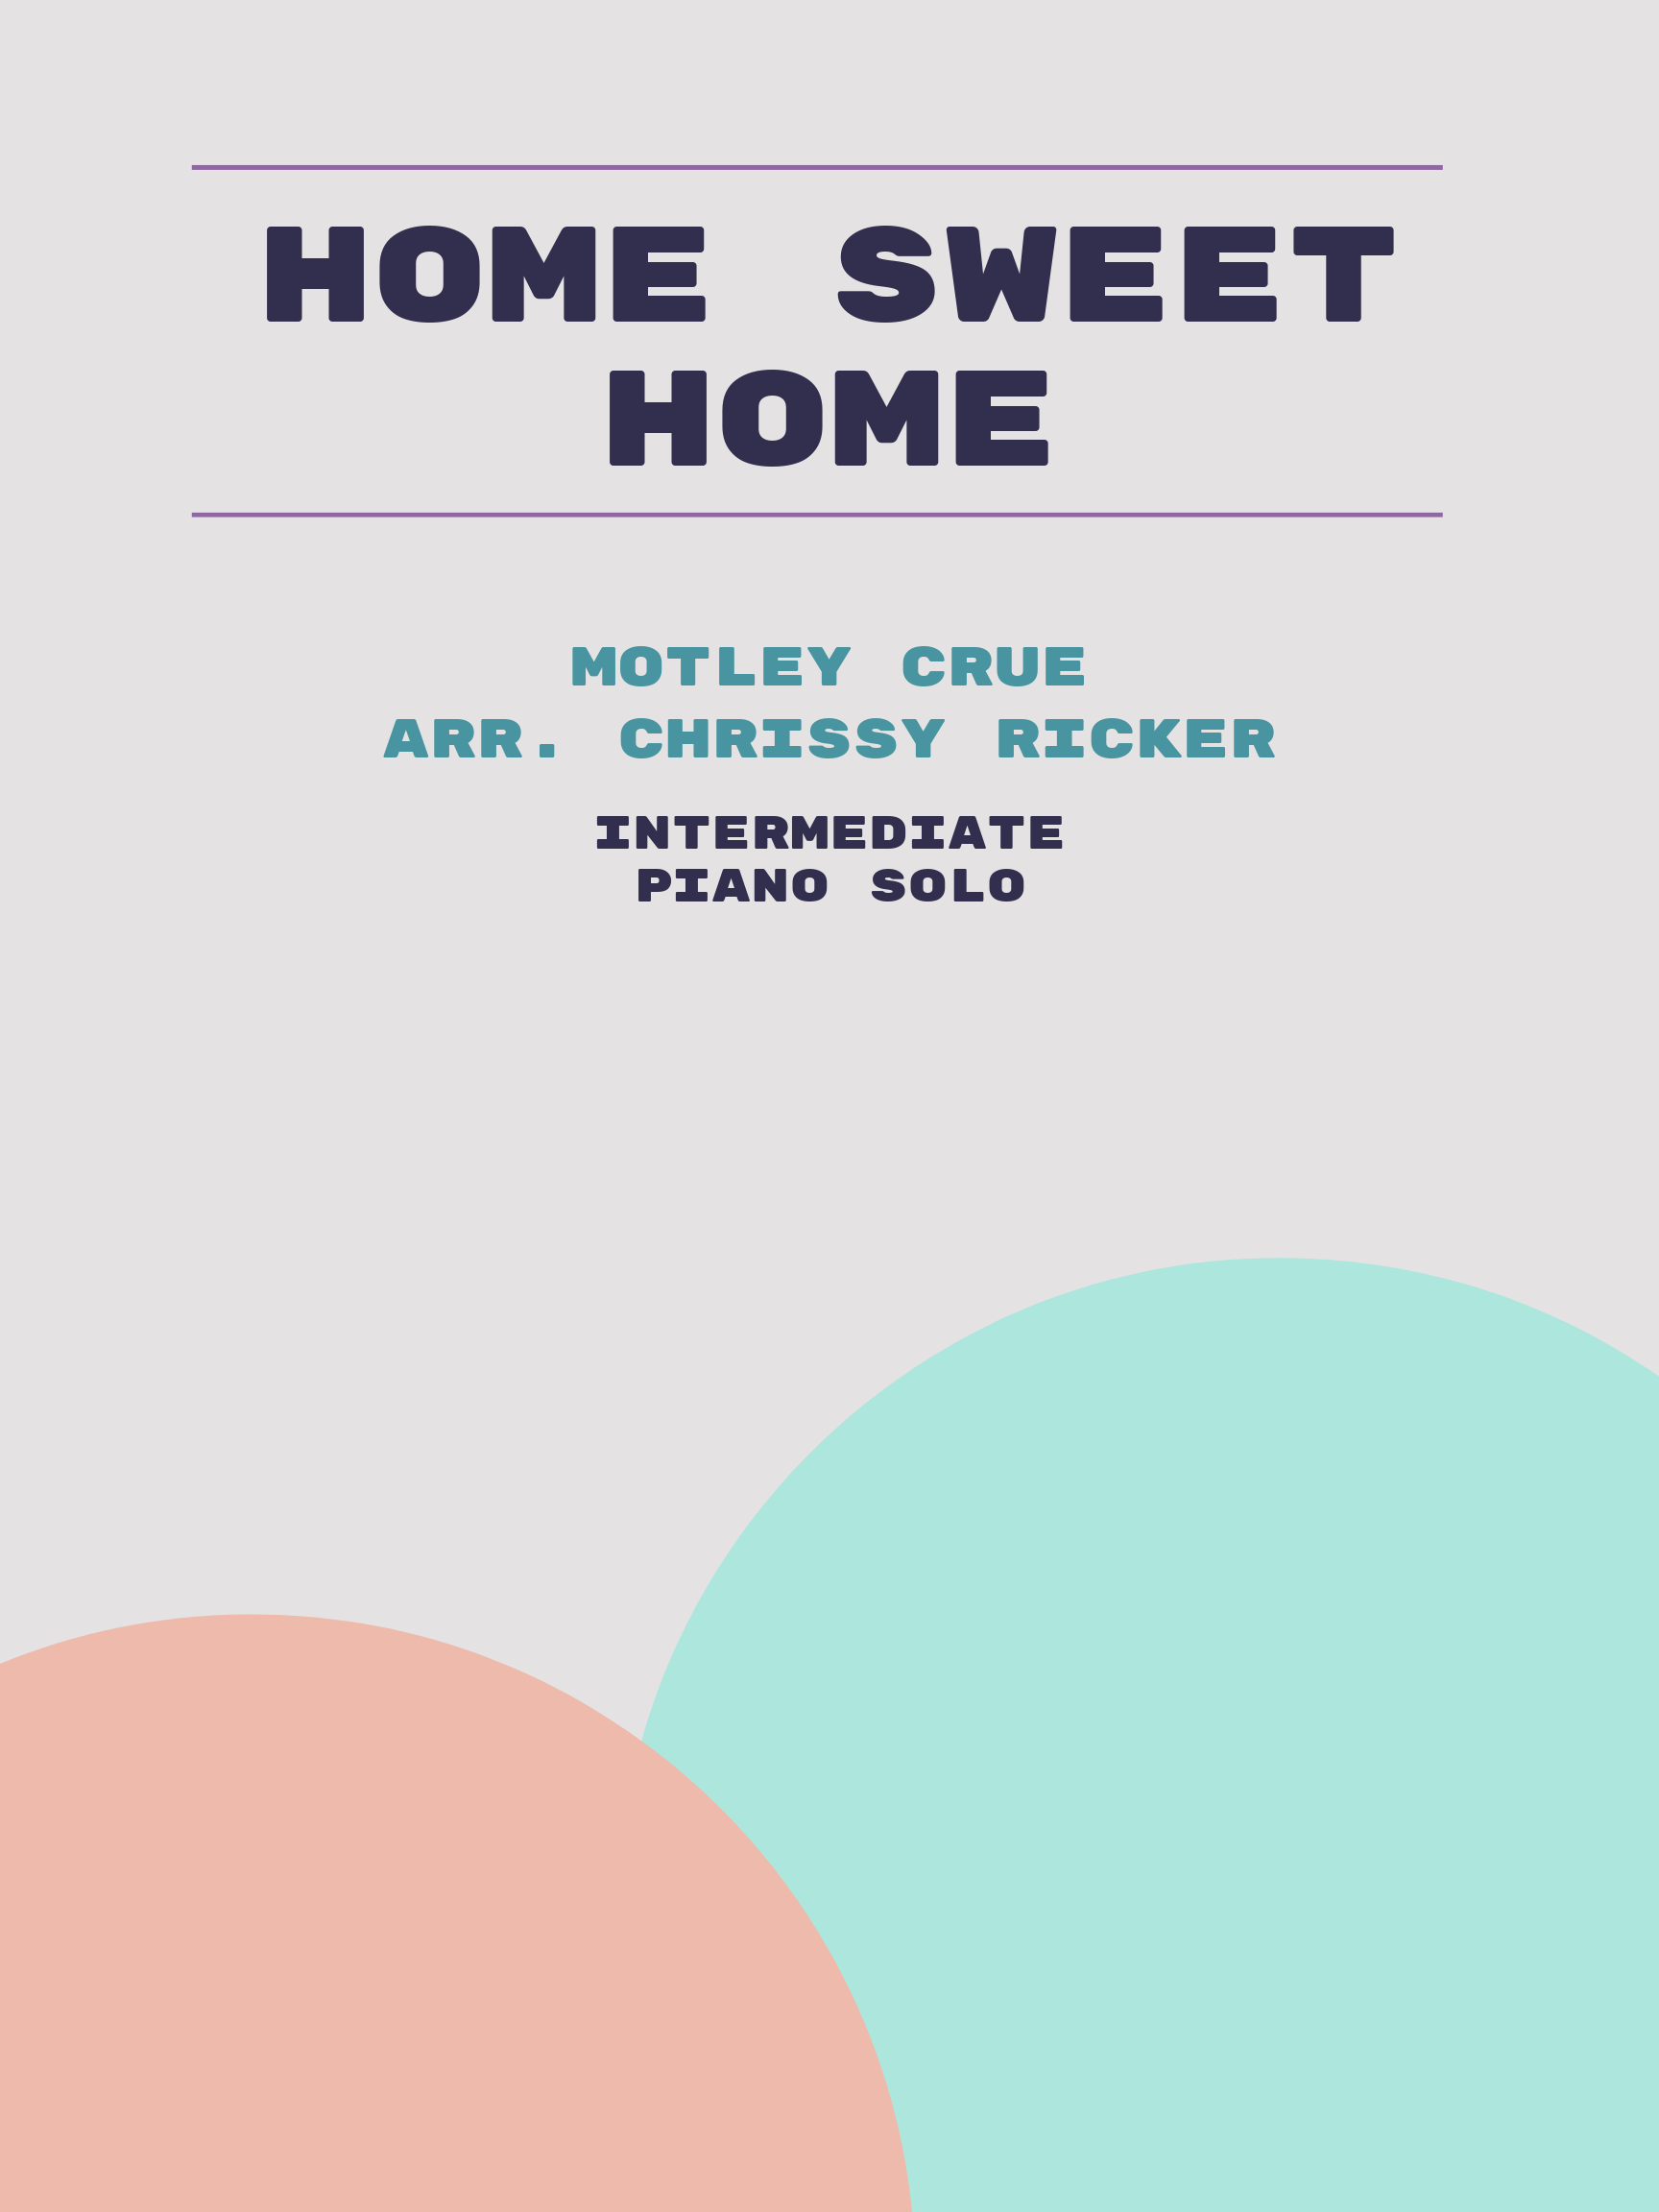 Home Sweet Home by Motley Crue